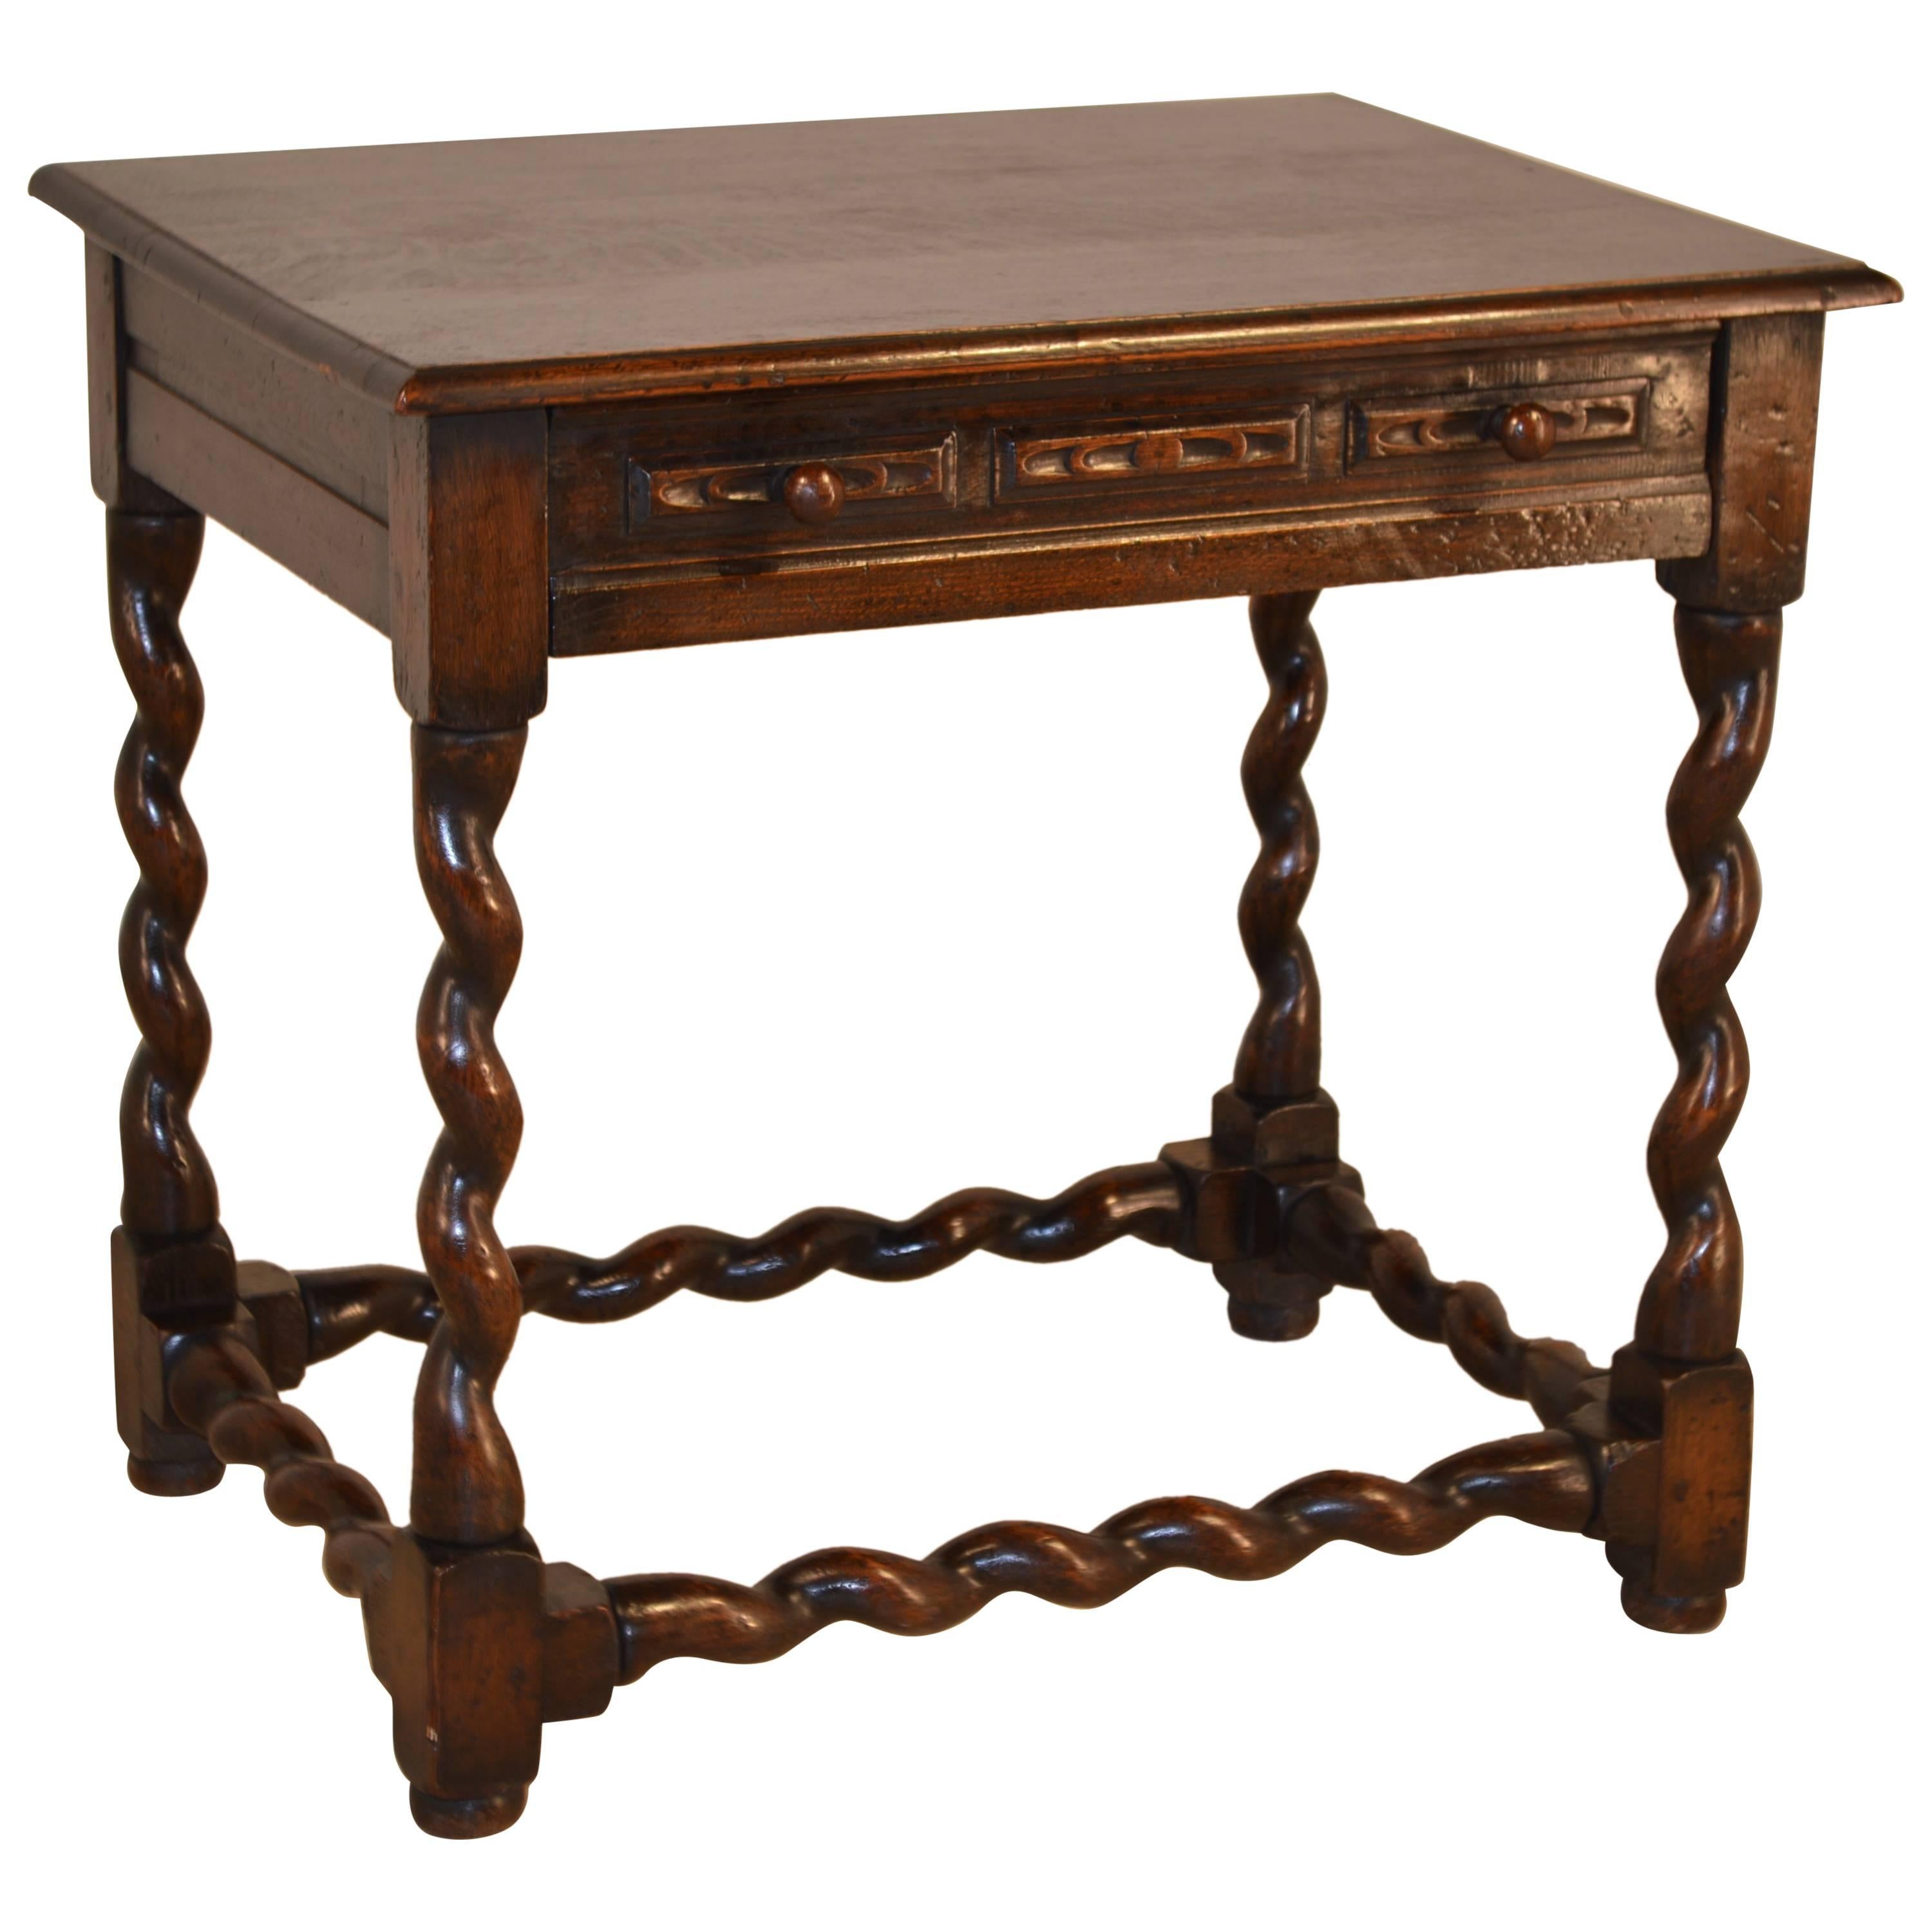 19th Century English Oak Side Table with Unusual Twist